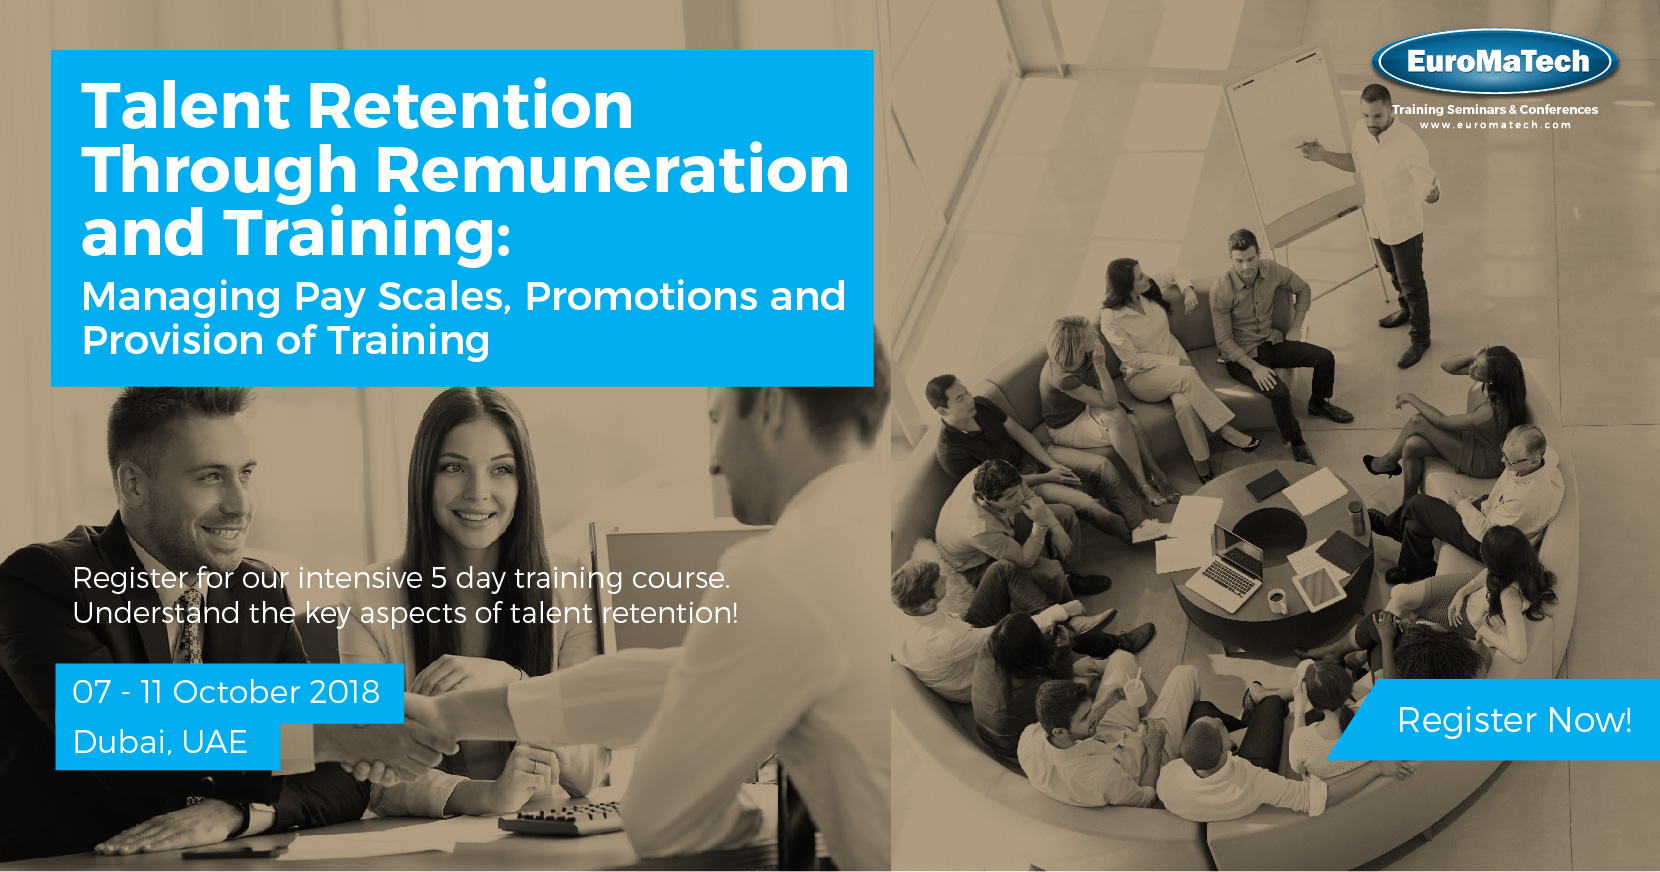 Talent Retention Through Remuneration and Training Programme in Dubai